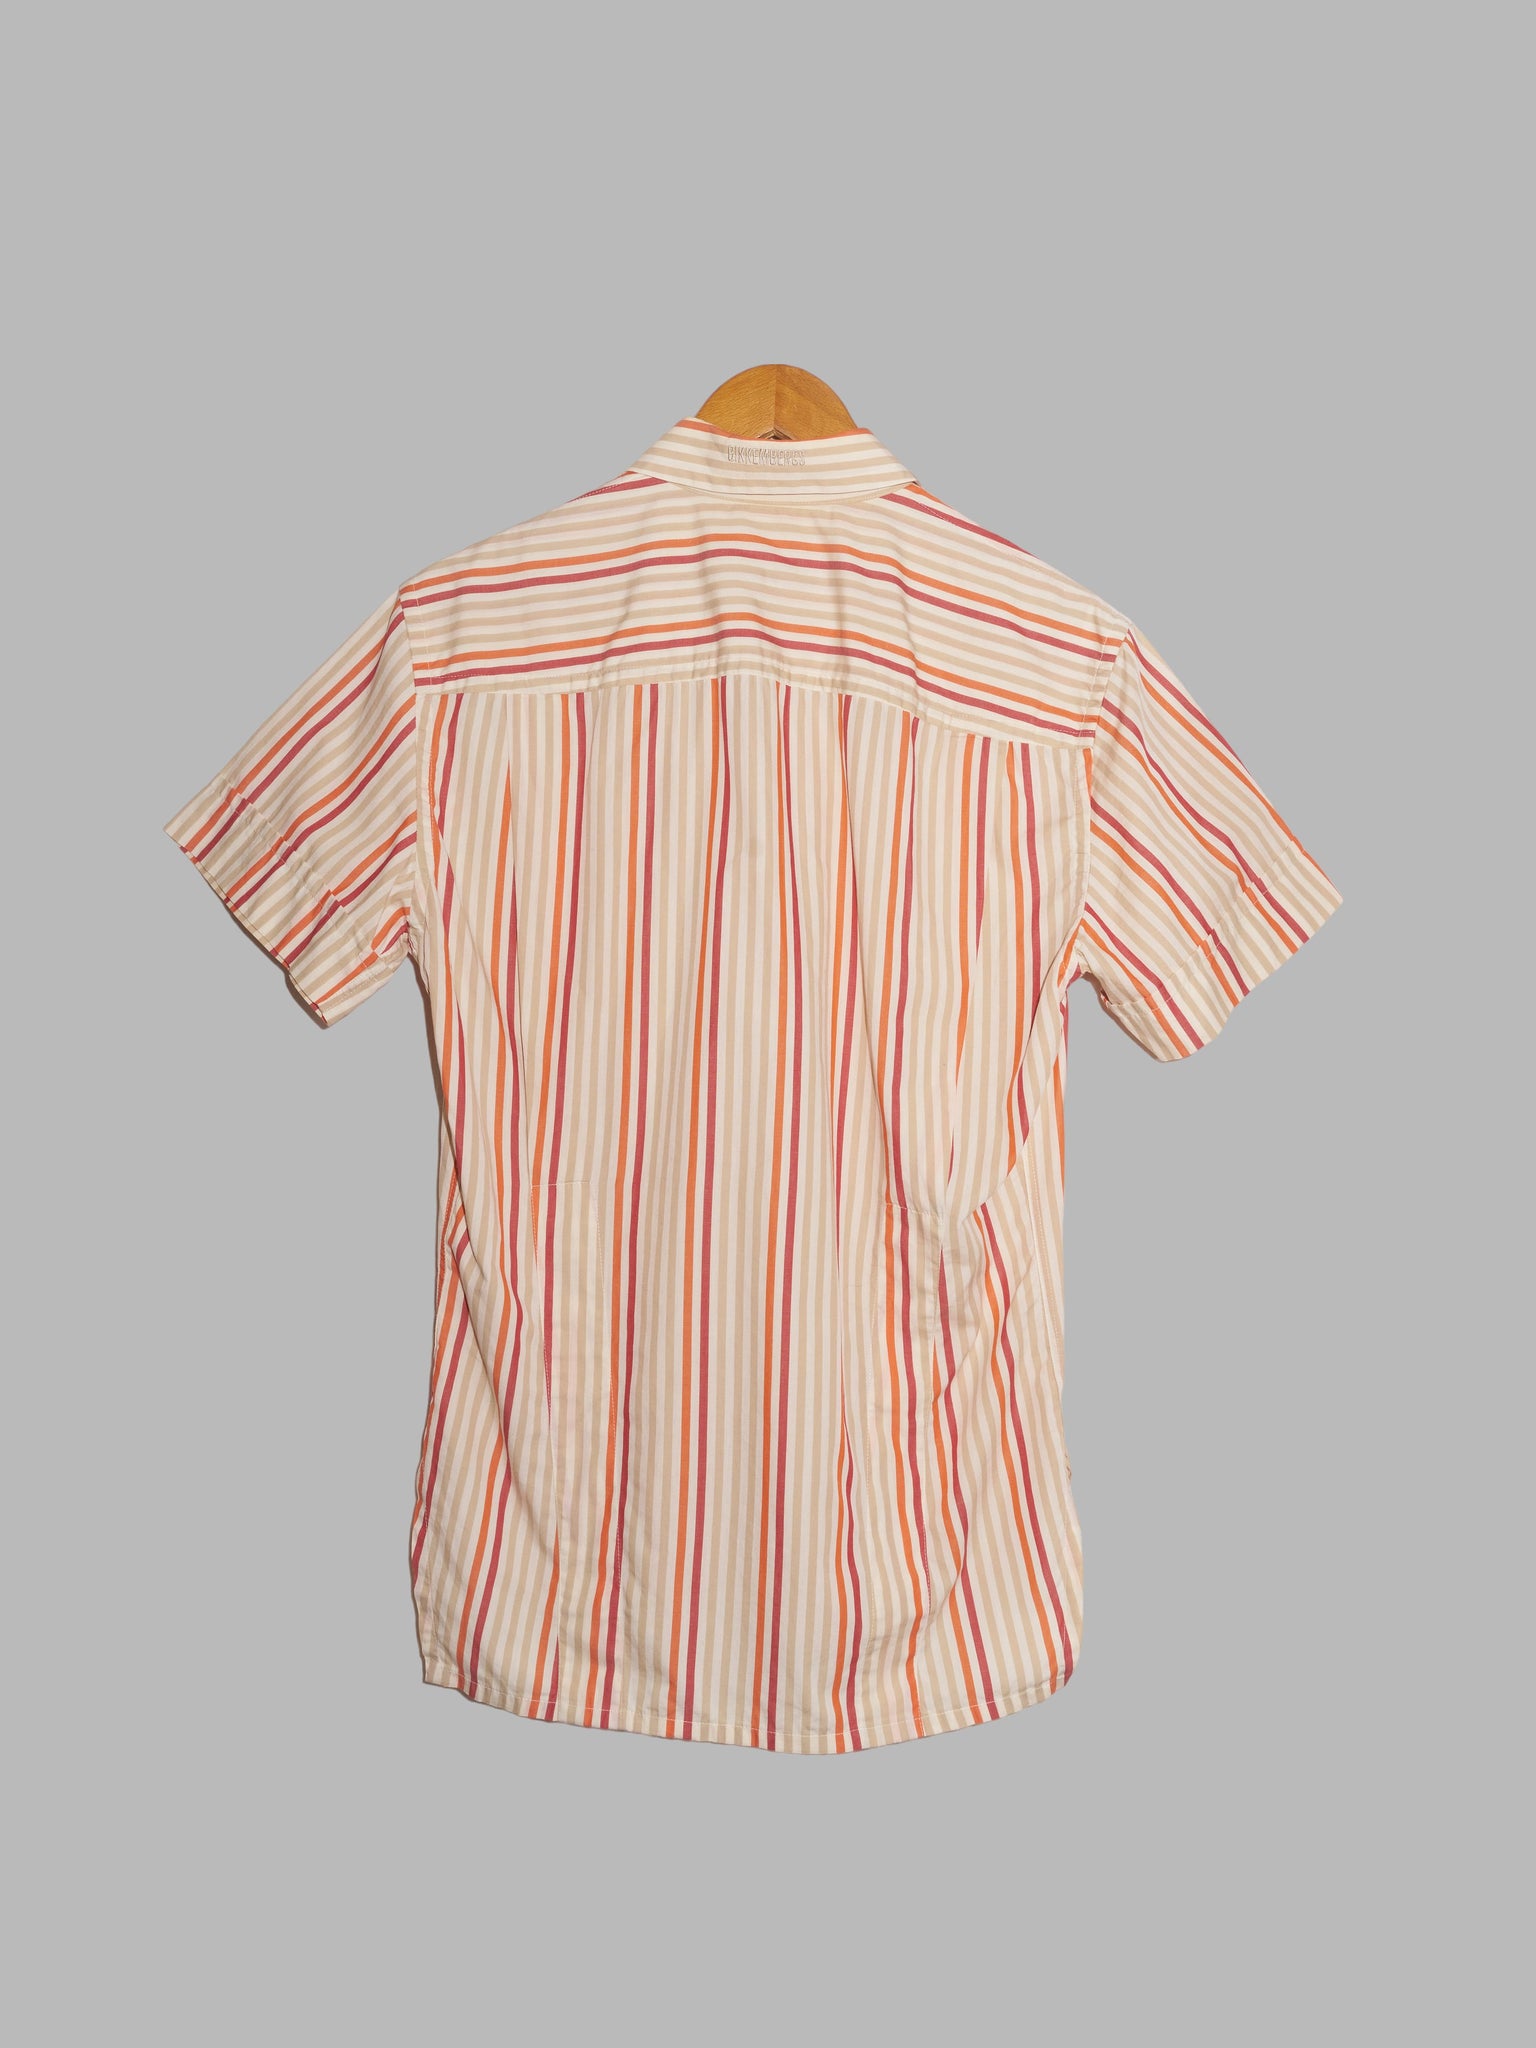 Dirk Bikkembergs beige orange red cotton stripe short sleeve shirt - S